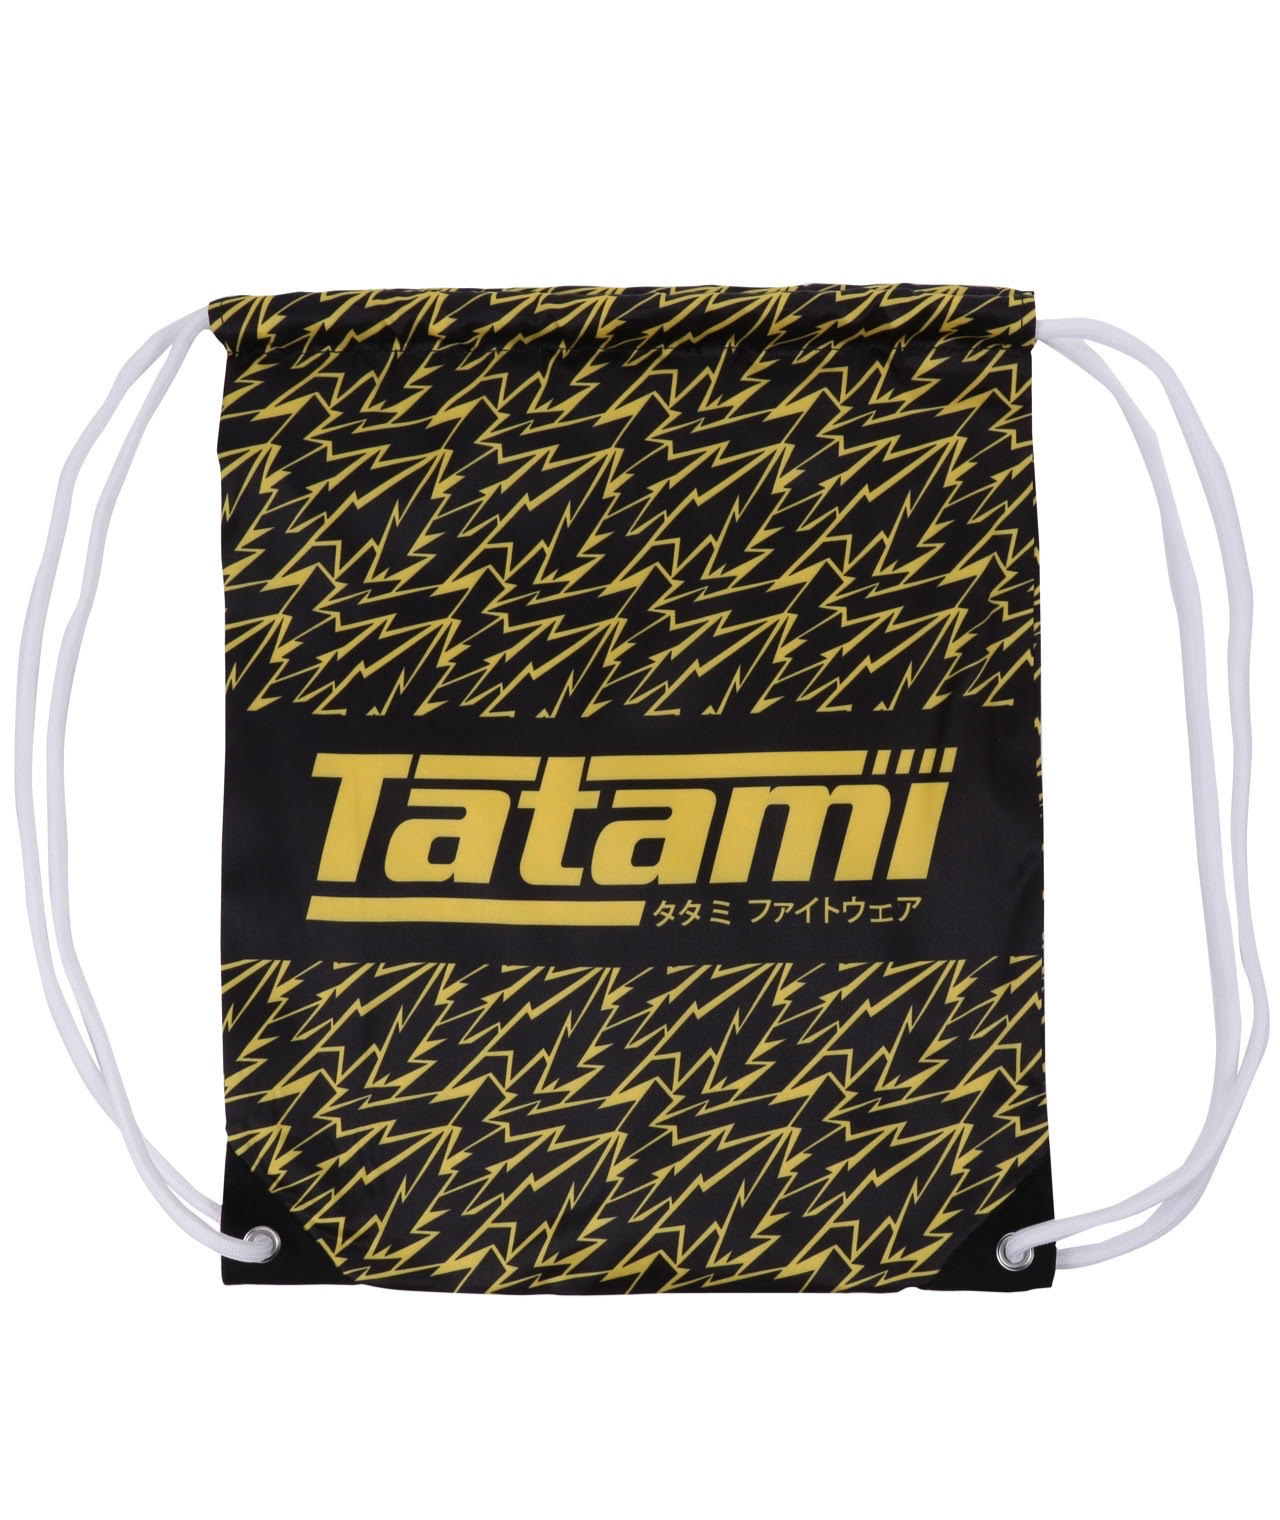 Tatami Ladies Ricarica Gi - Bolt